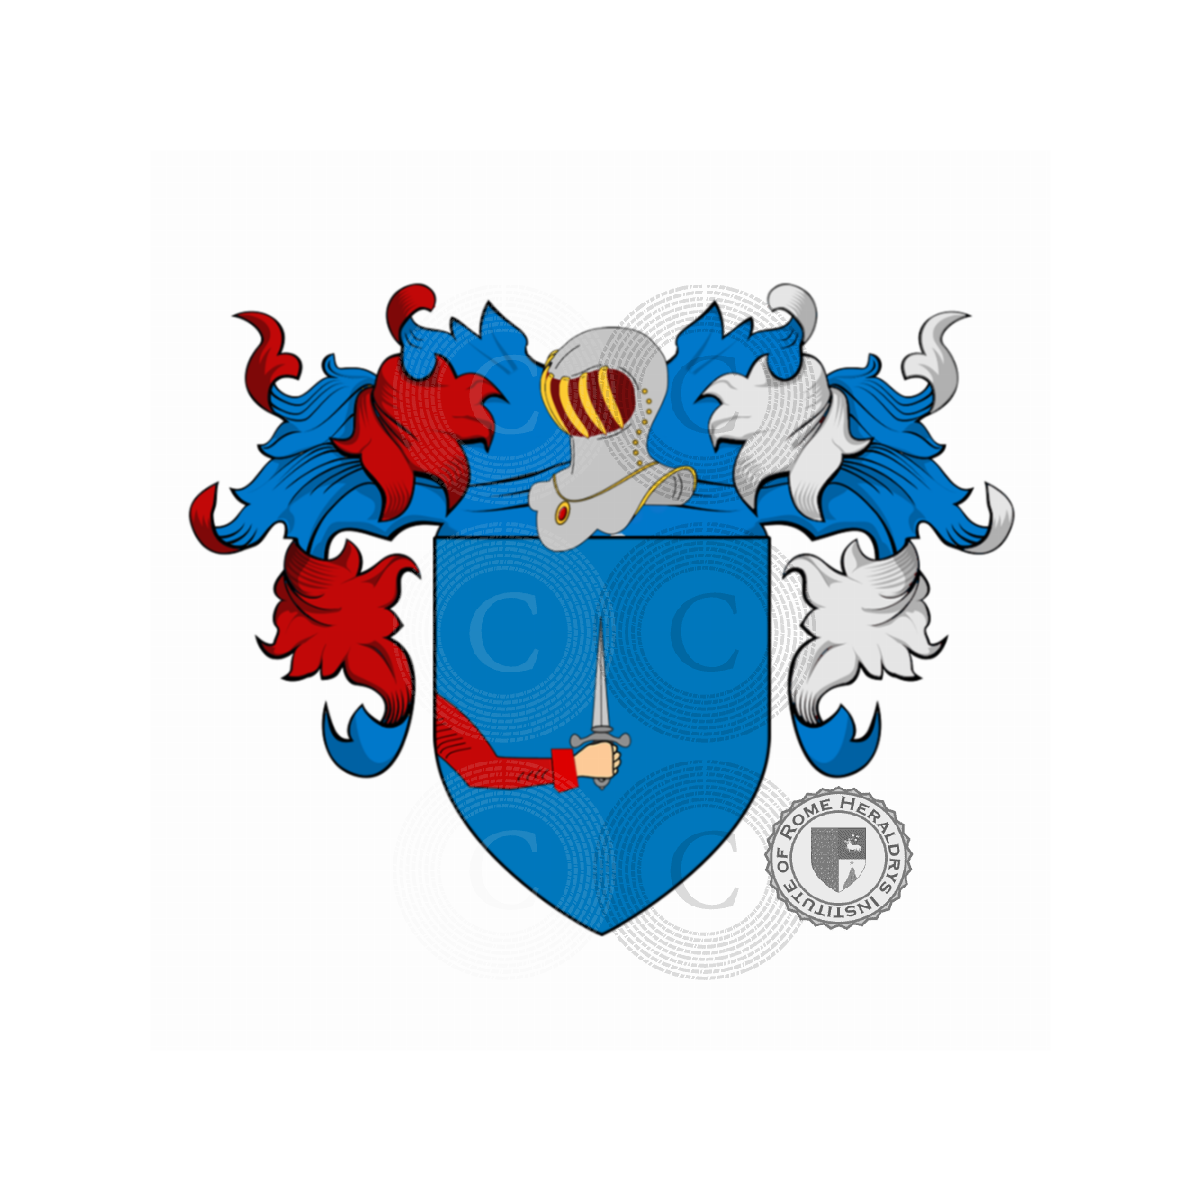 Coat of arms of familyFlorio, Florioli